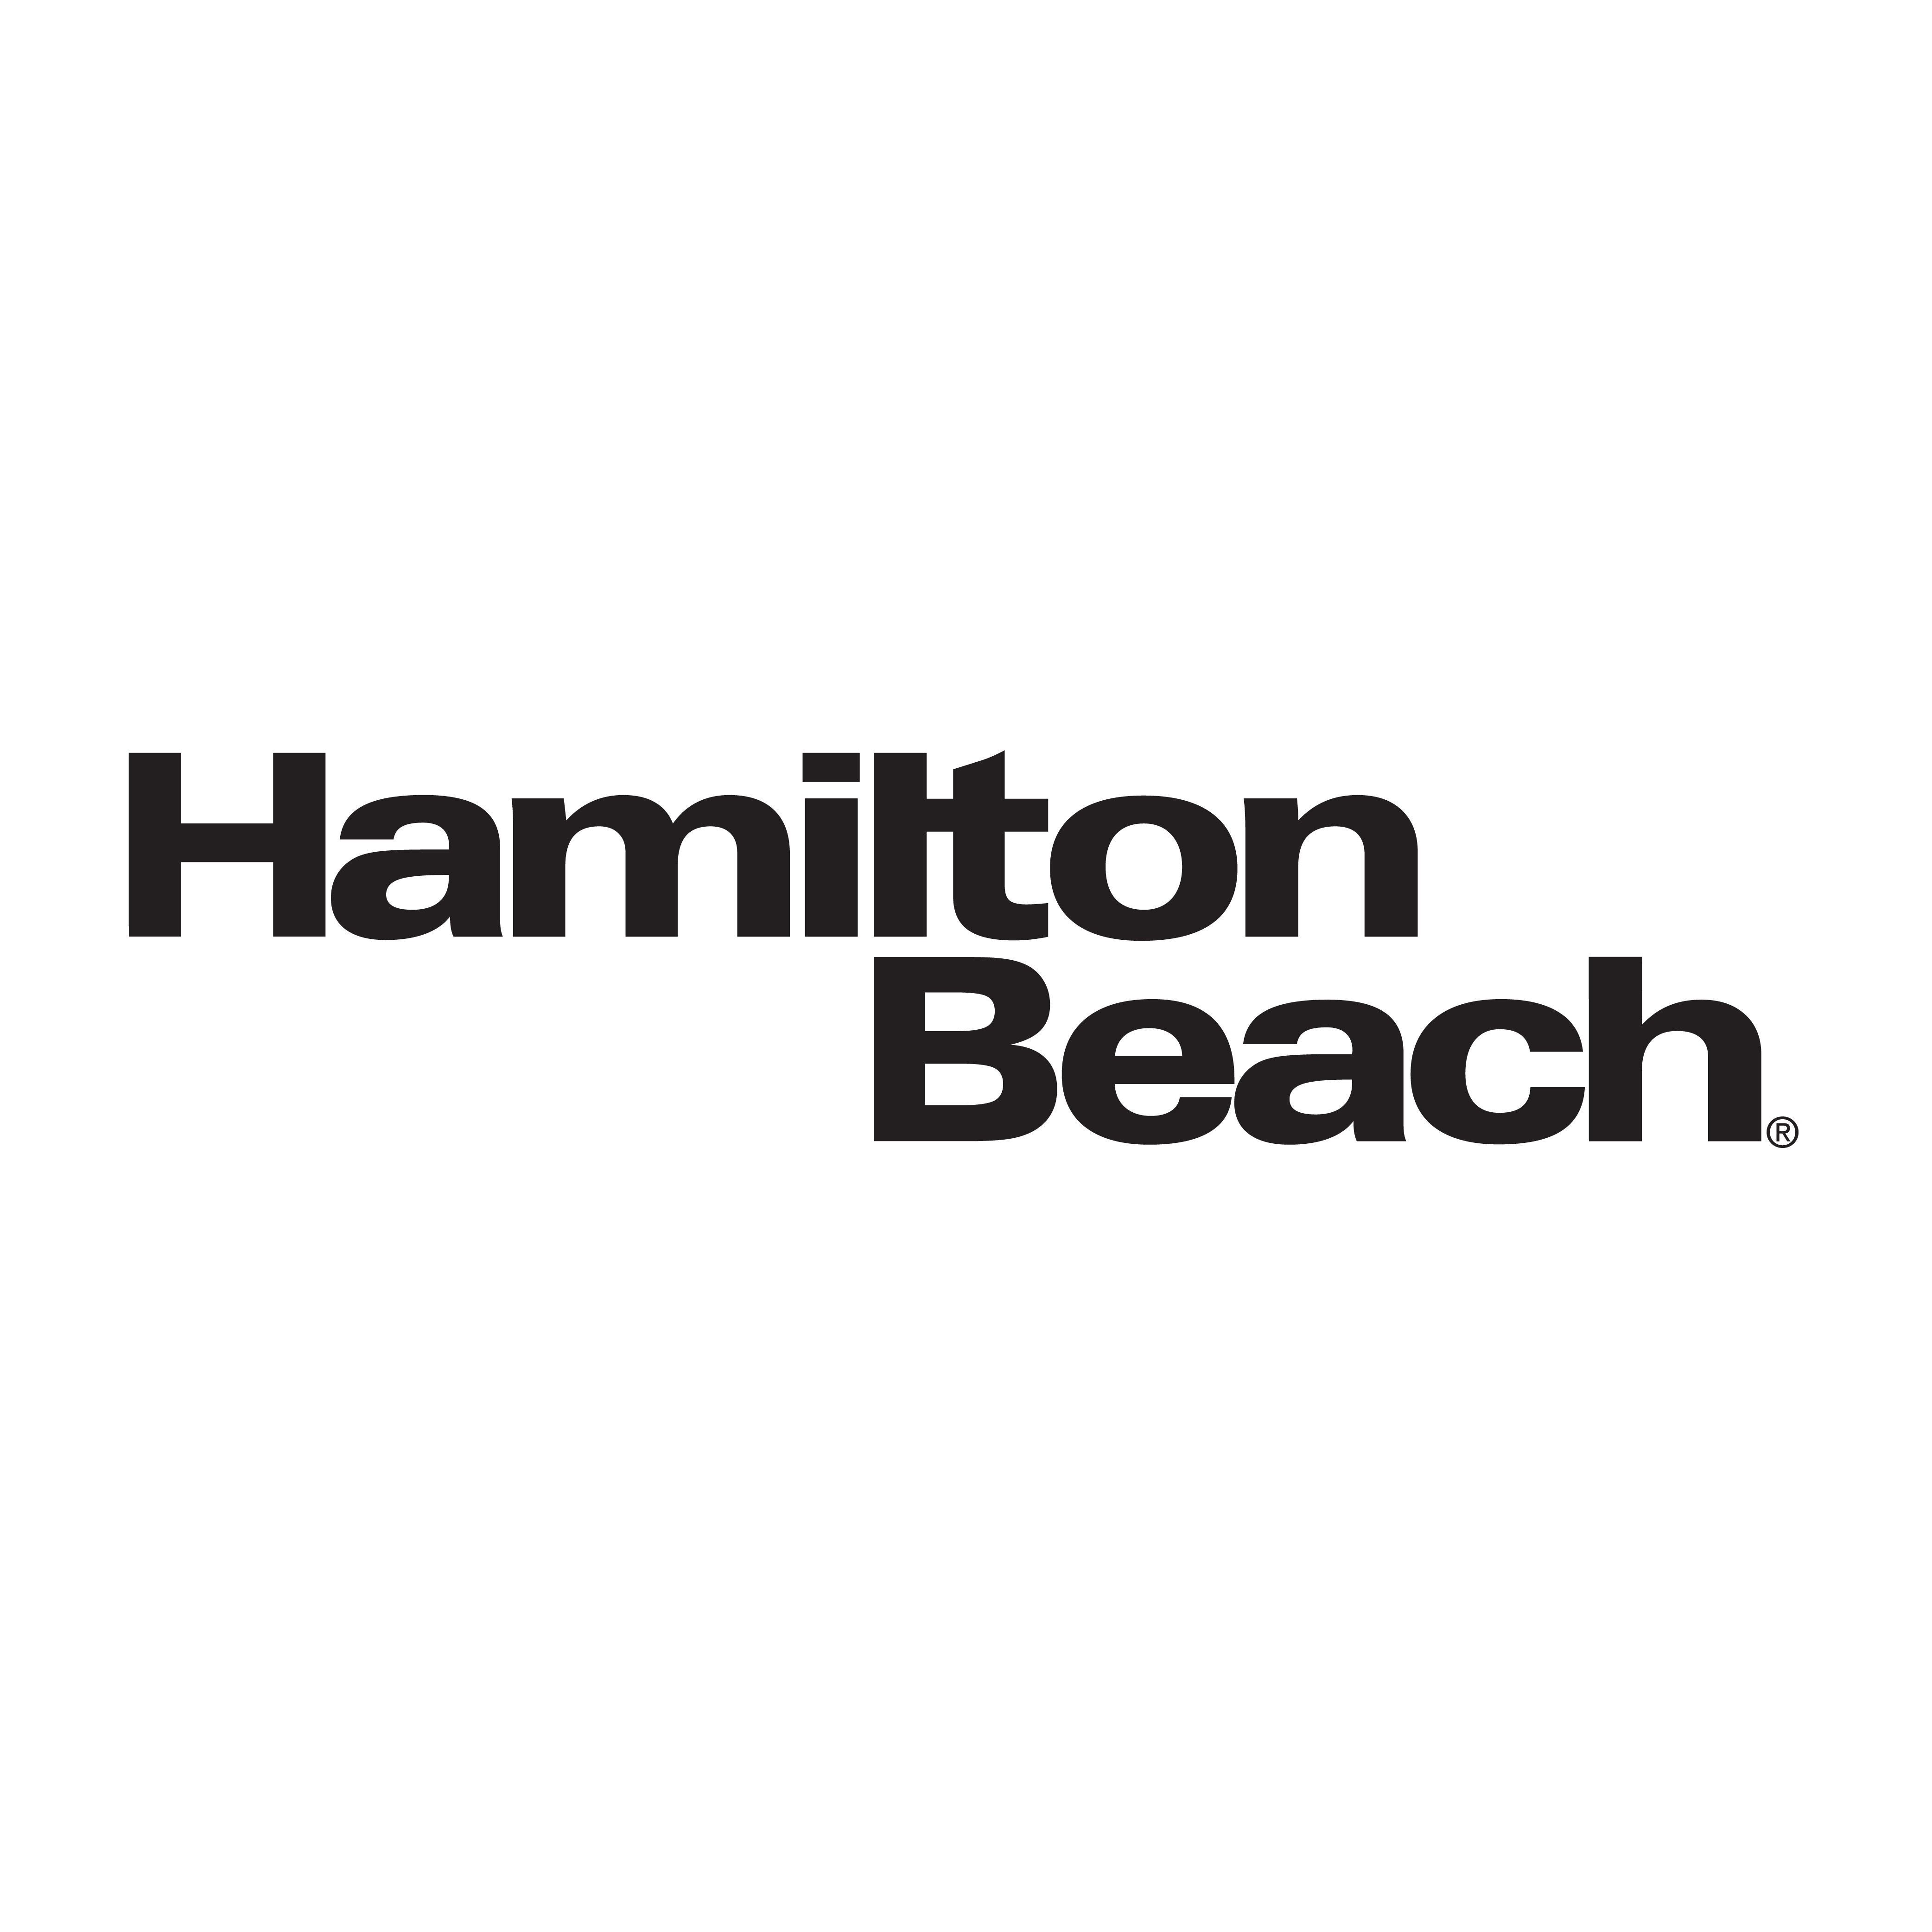 Hamilton Beach Discount Code